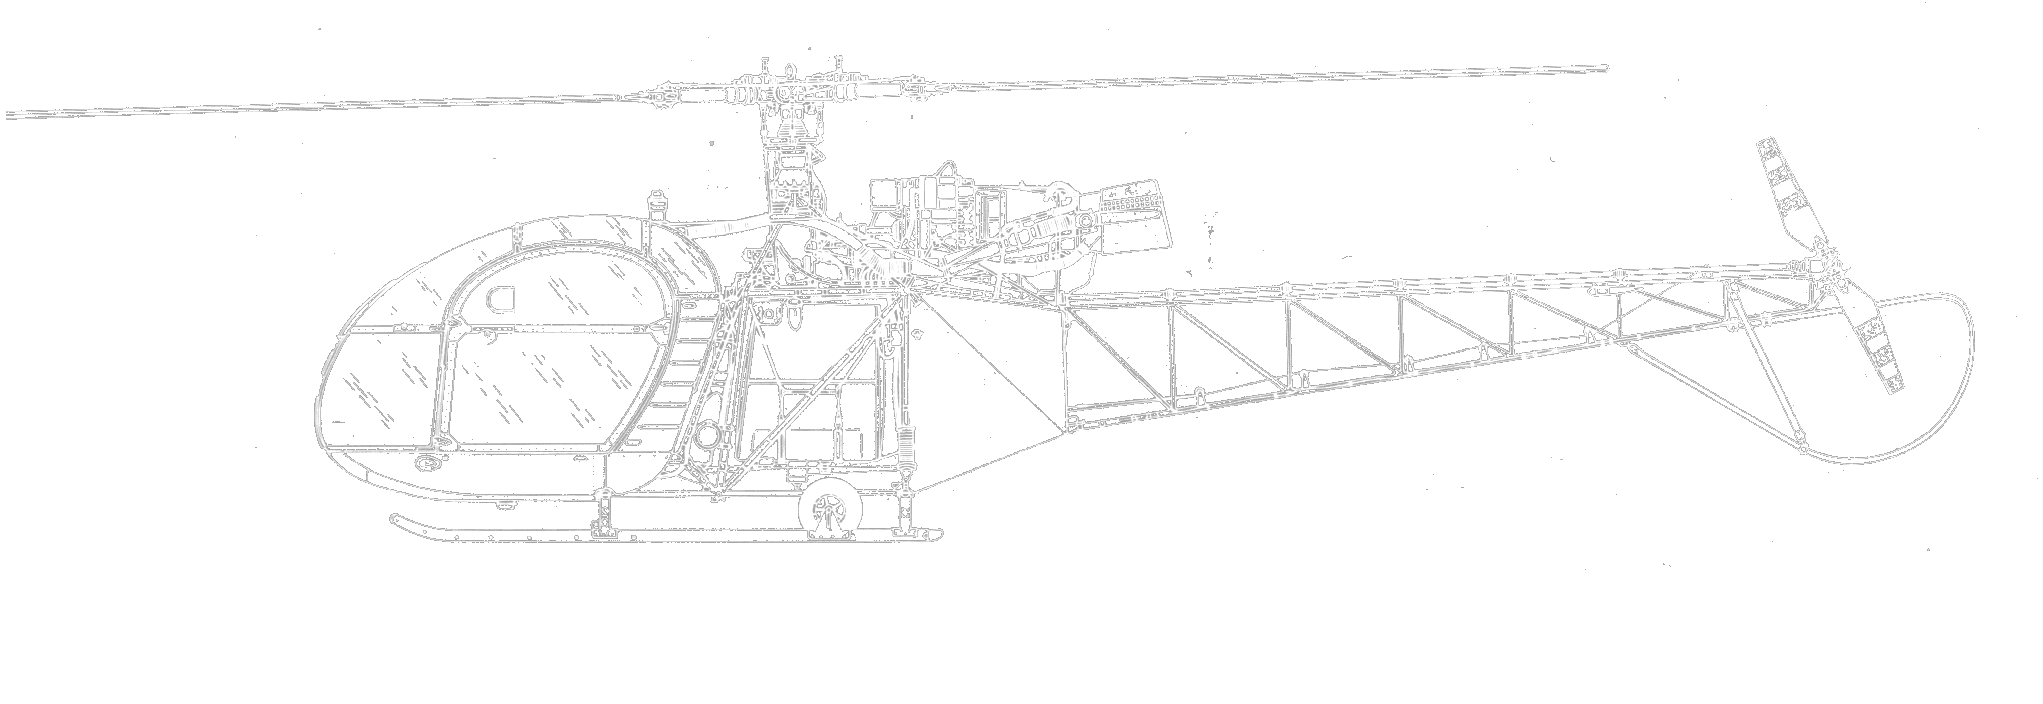 Alouette-II-001